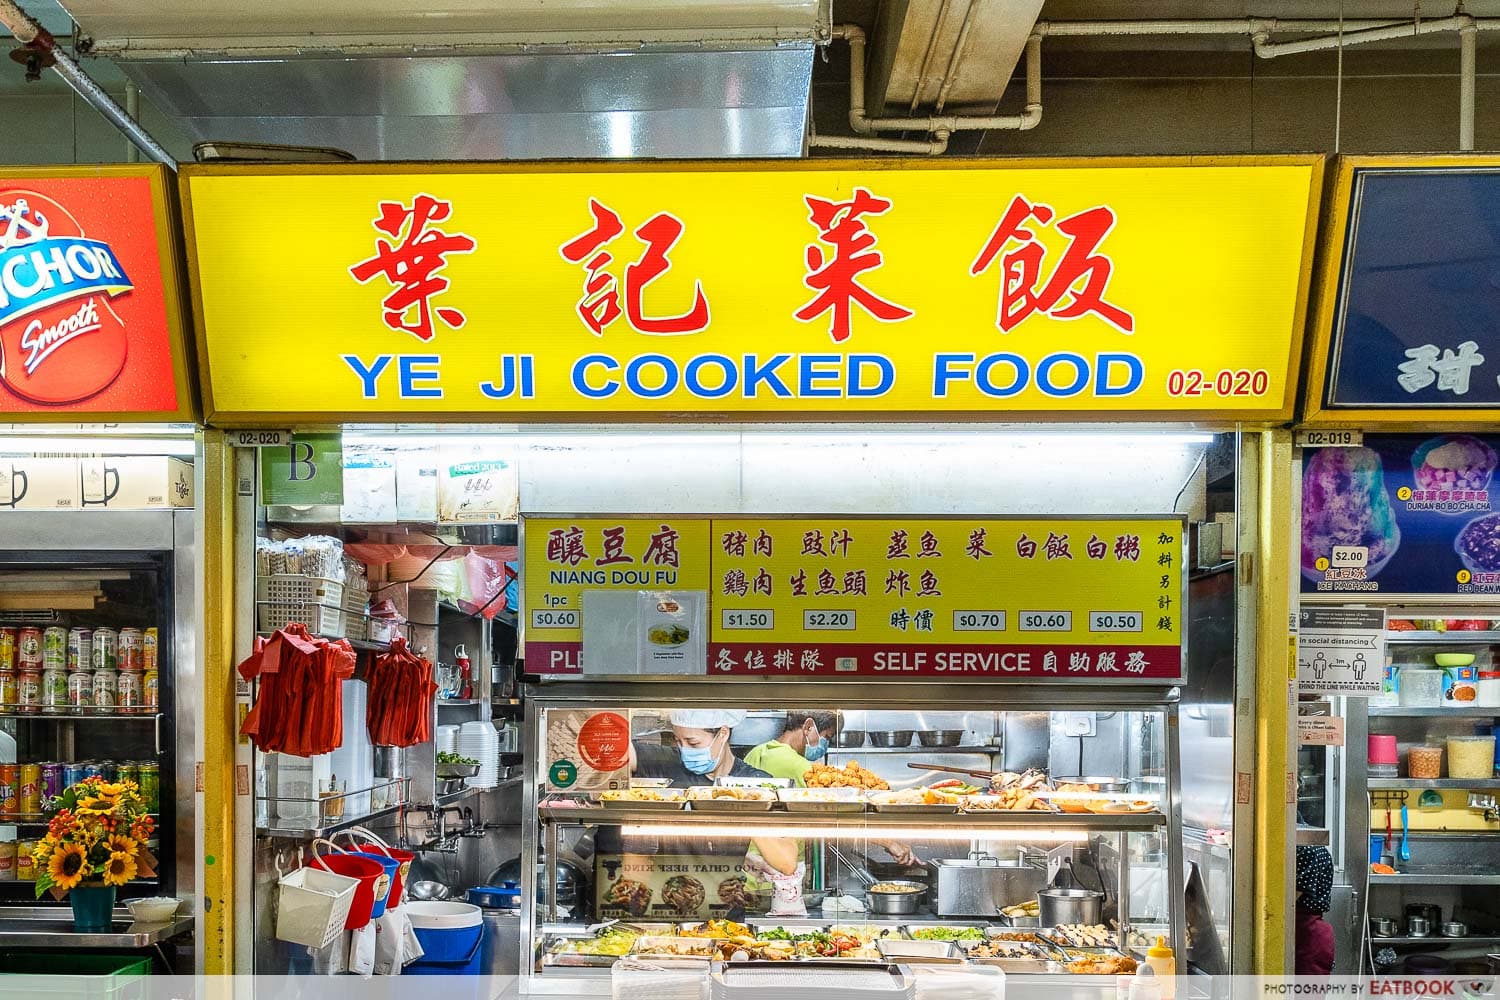 ye ji cooked food - storefront